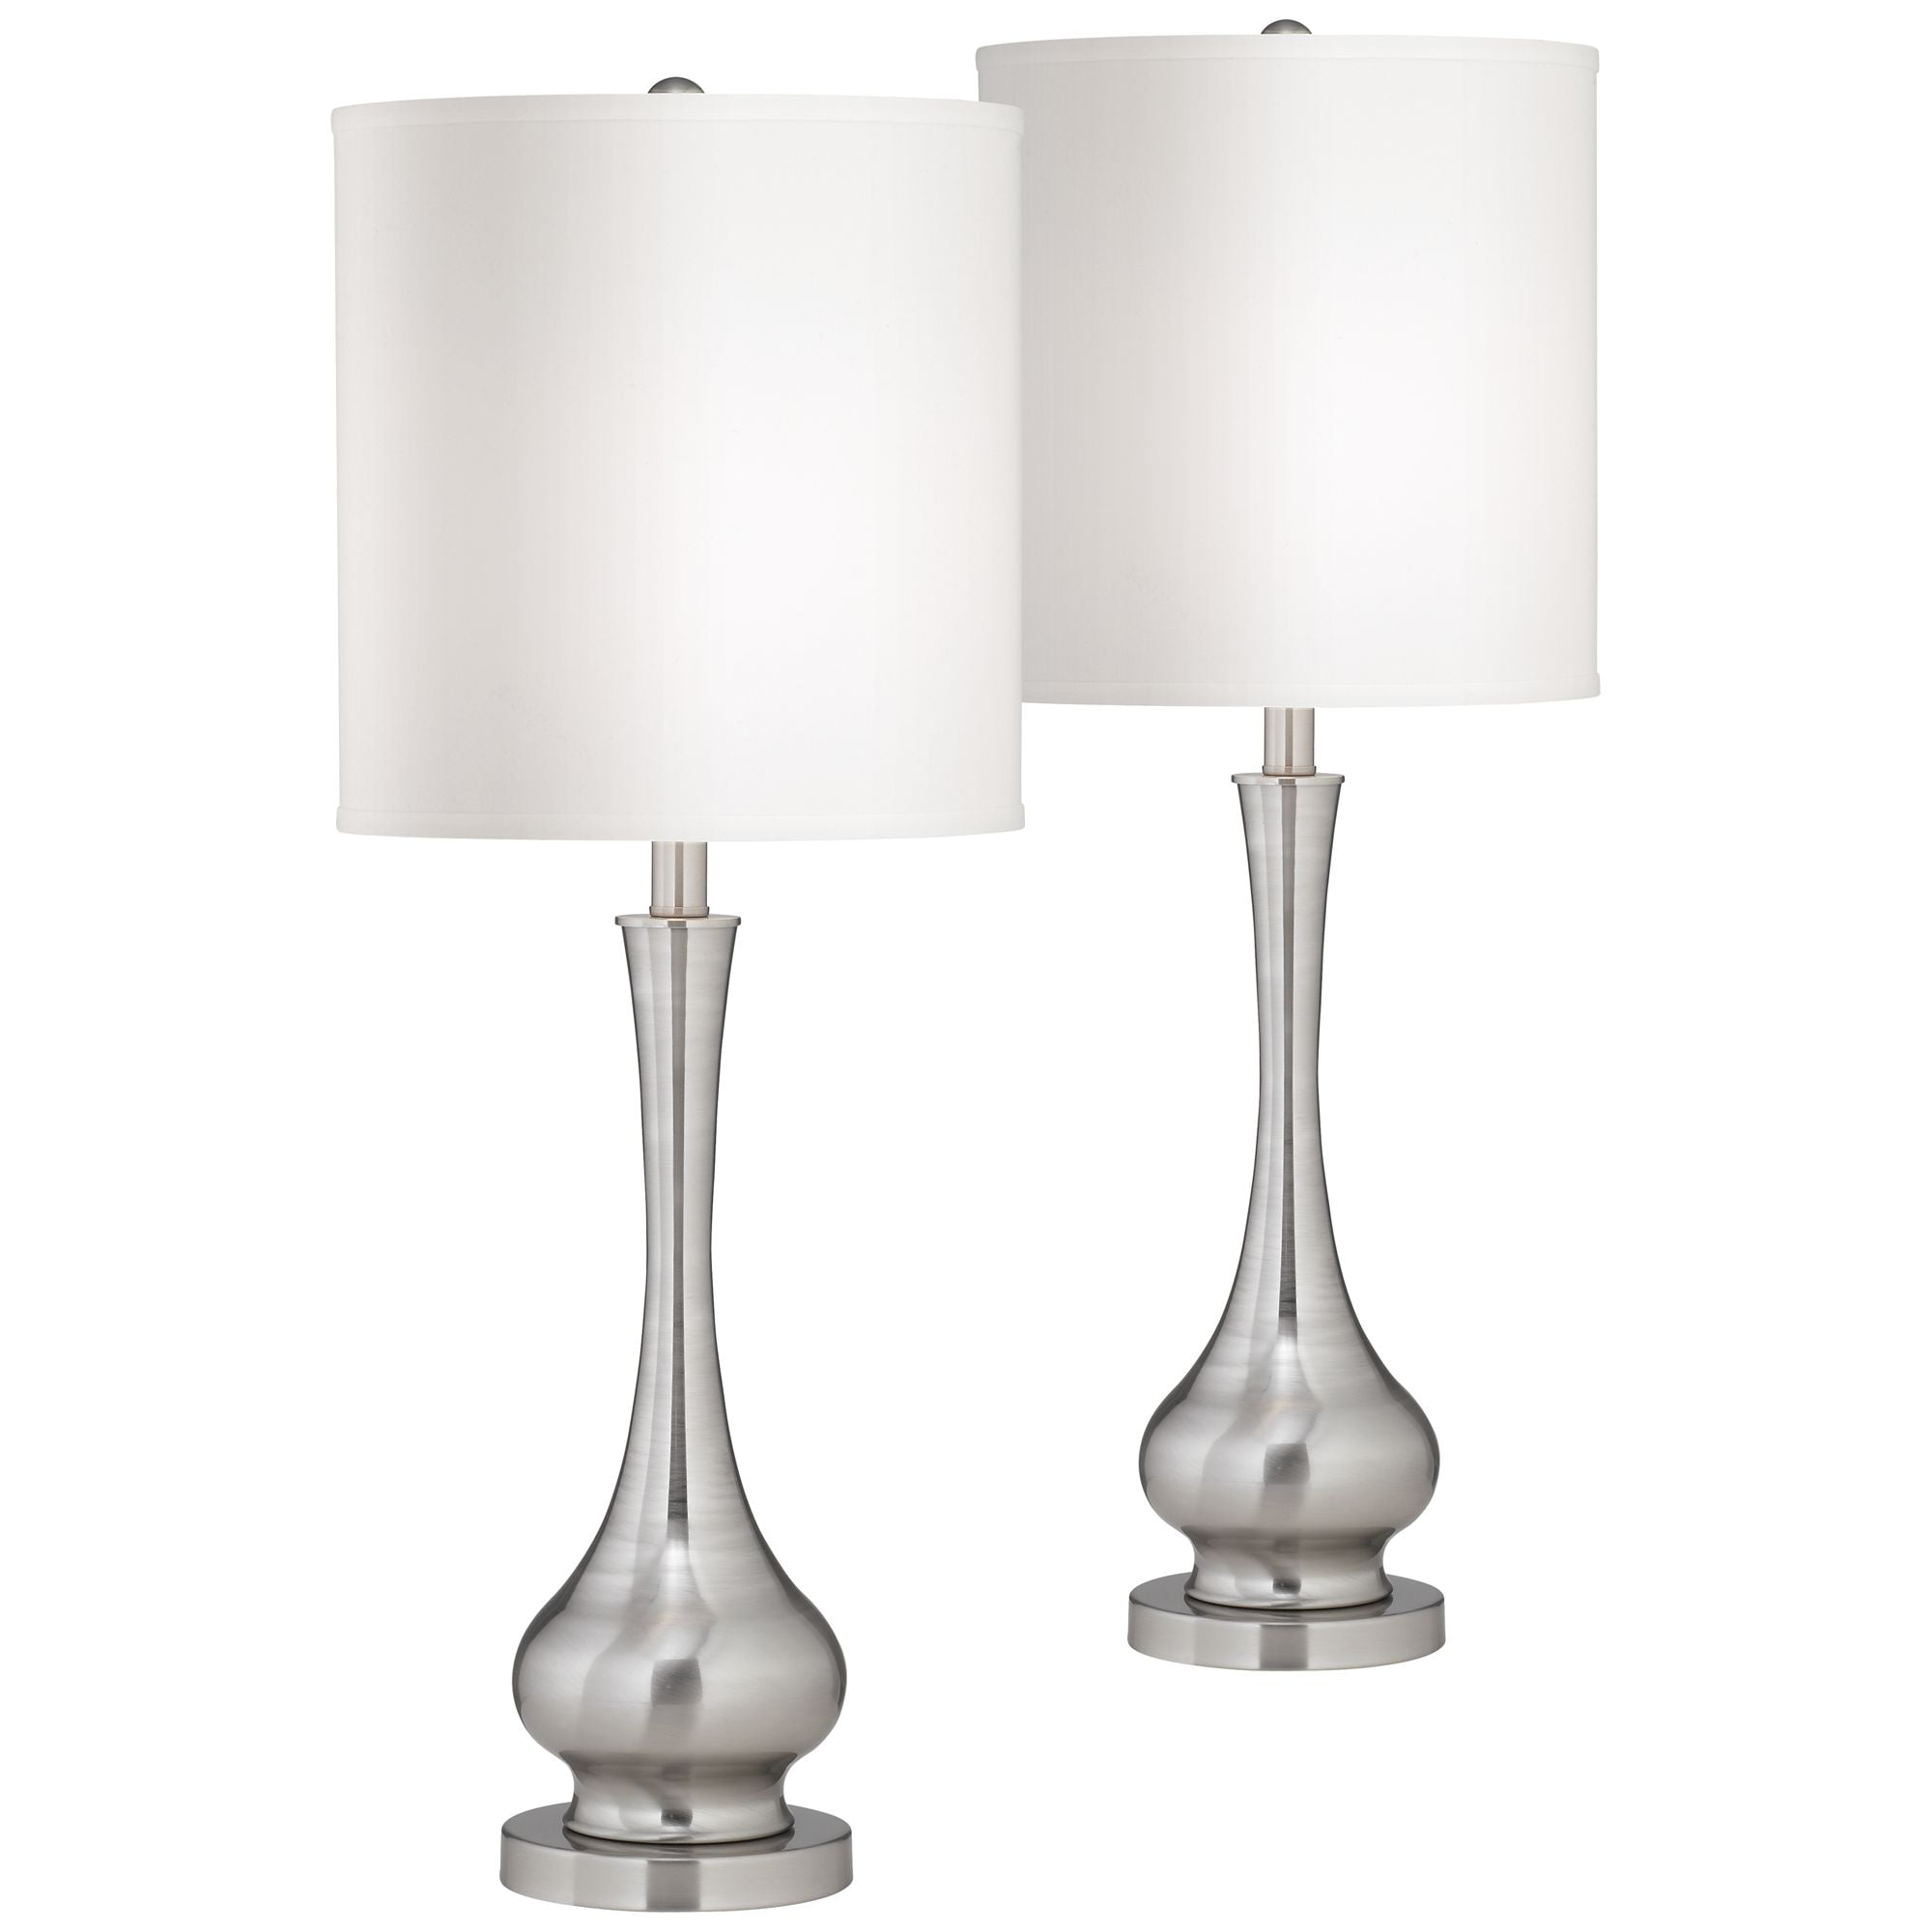 Possini Euro Design Modern Table Lamps Set of 2 Brushed